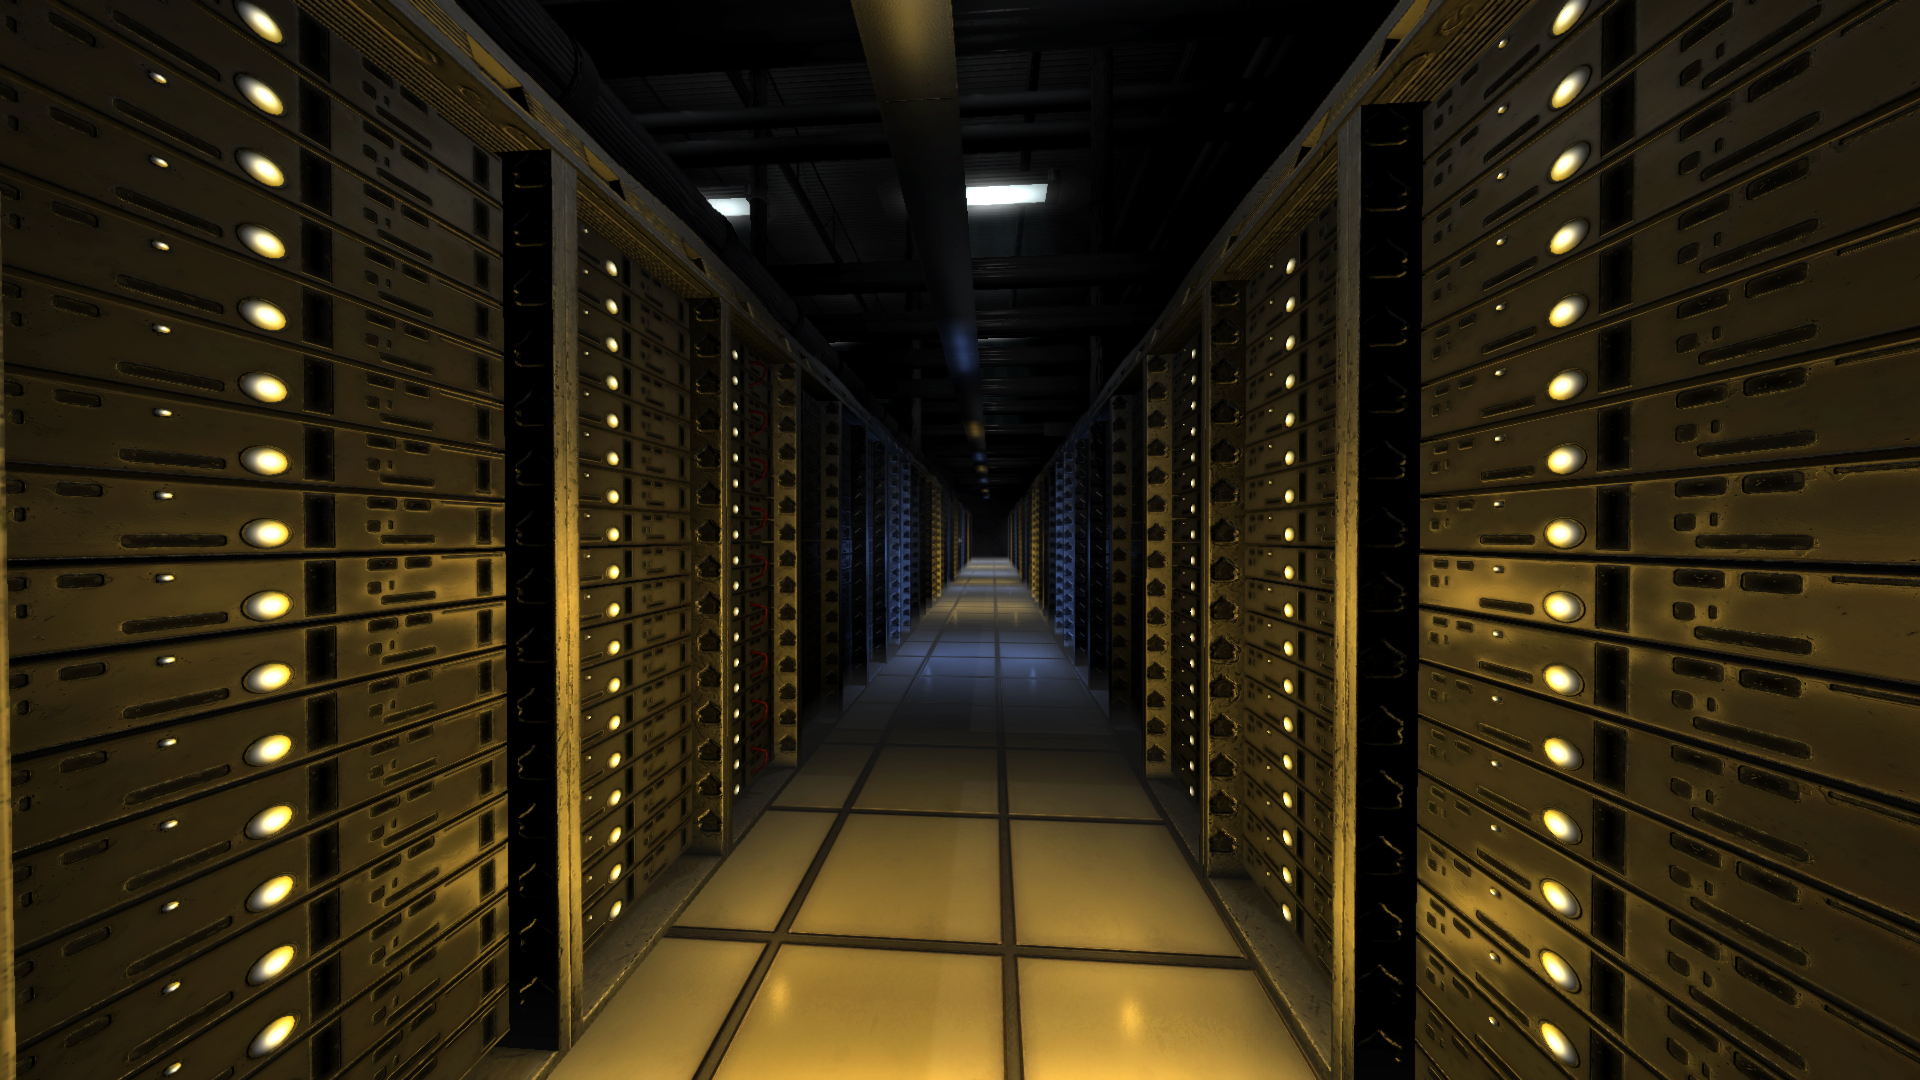 The Server Room Image Spacies Mod For Amnesia Dark